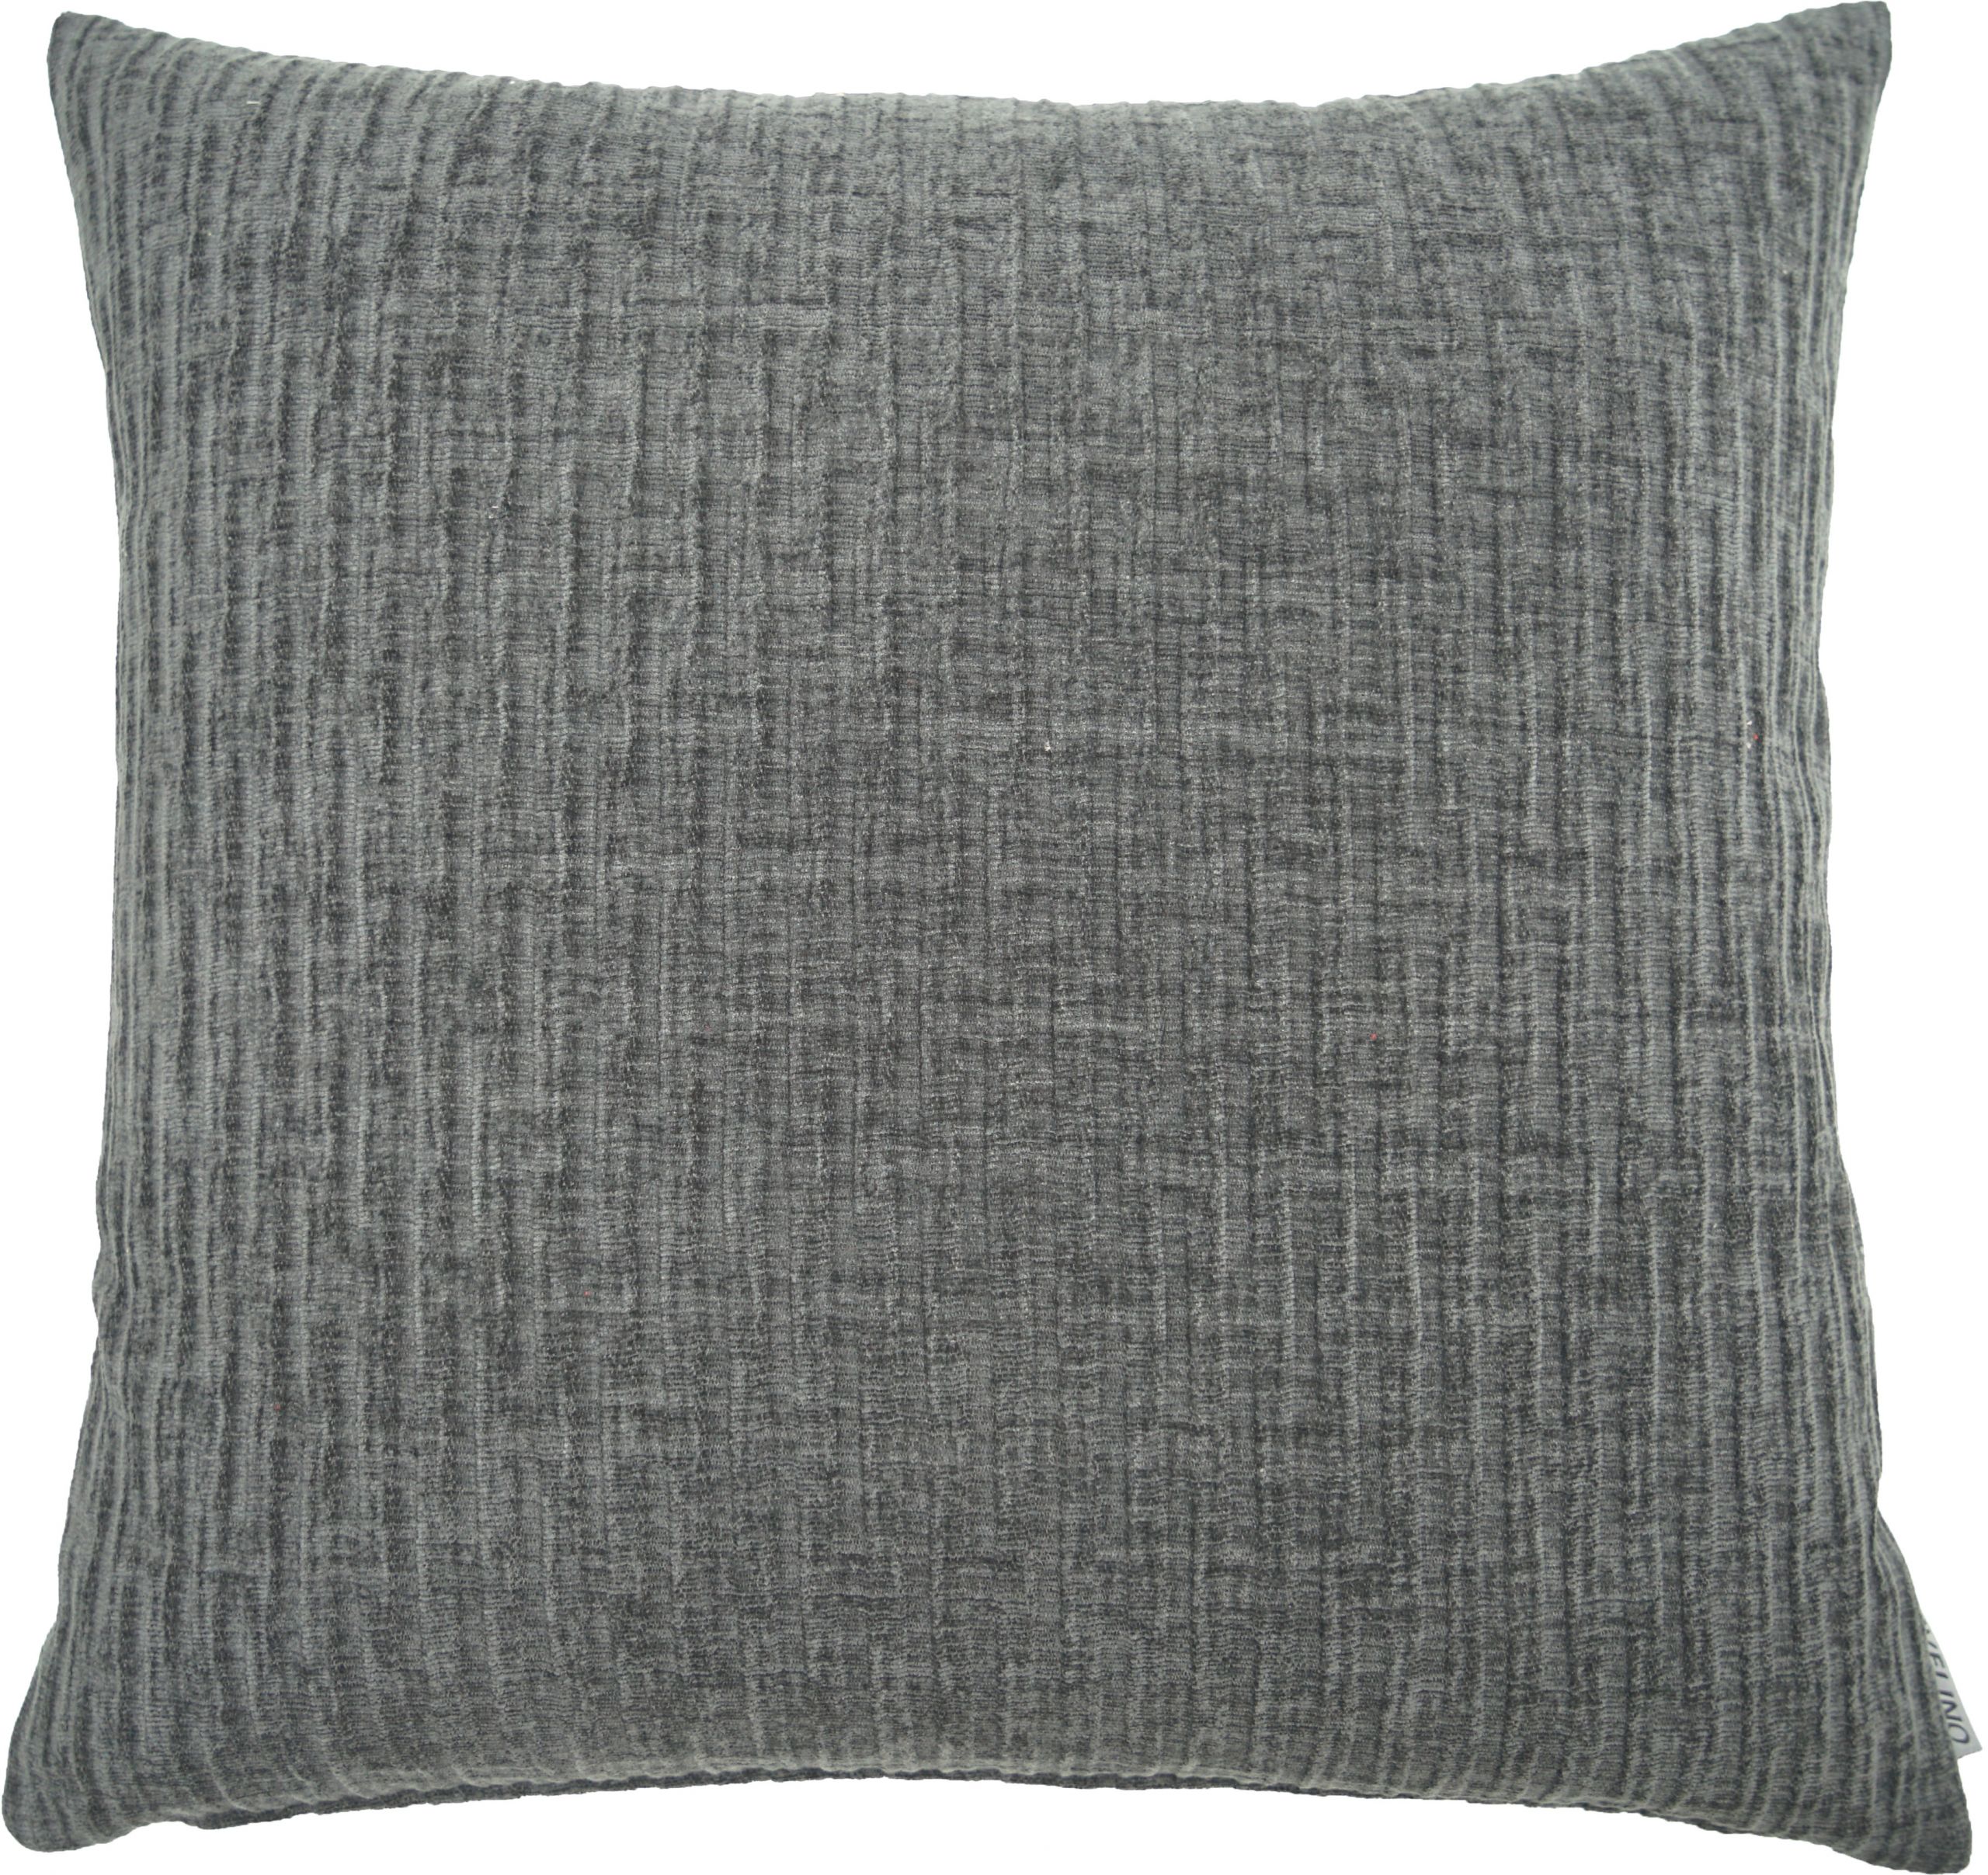 Deko-Kissen – LB ca. 48×48 cm, Stahlfarben